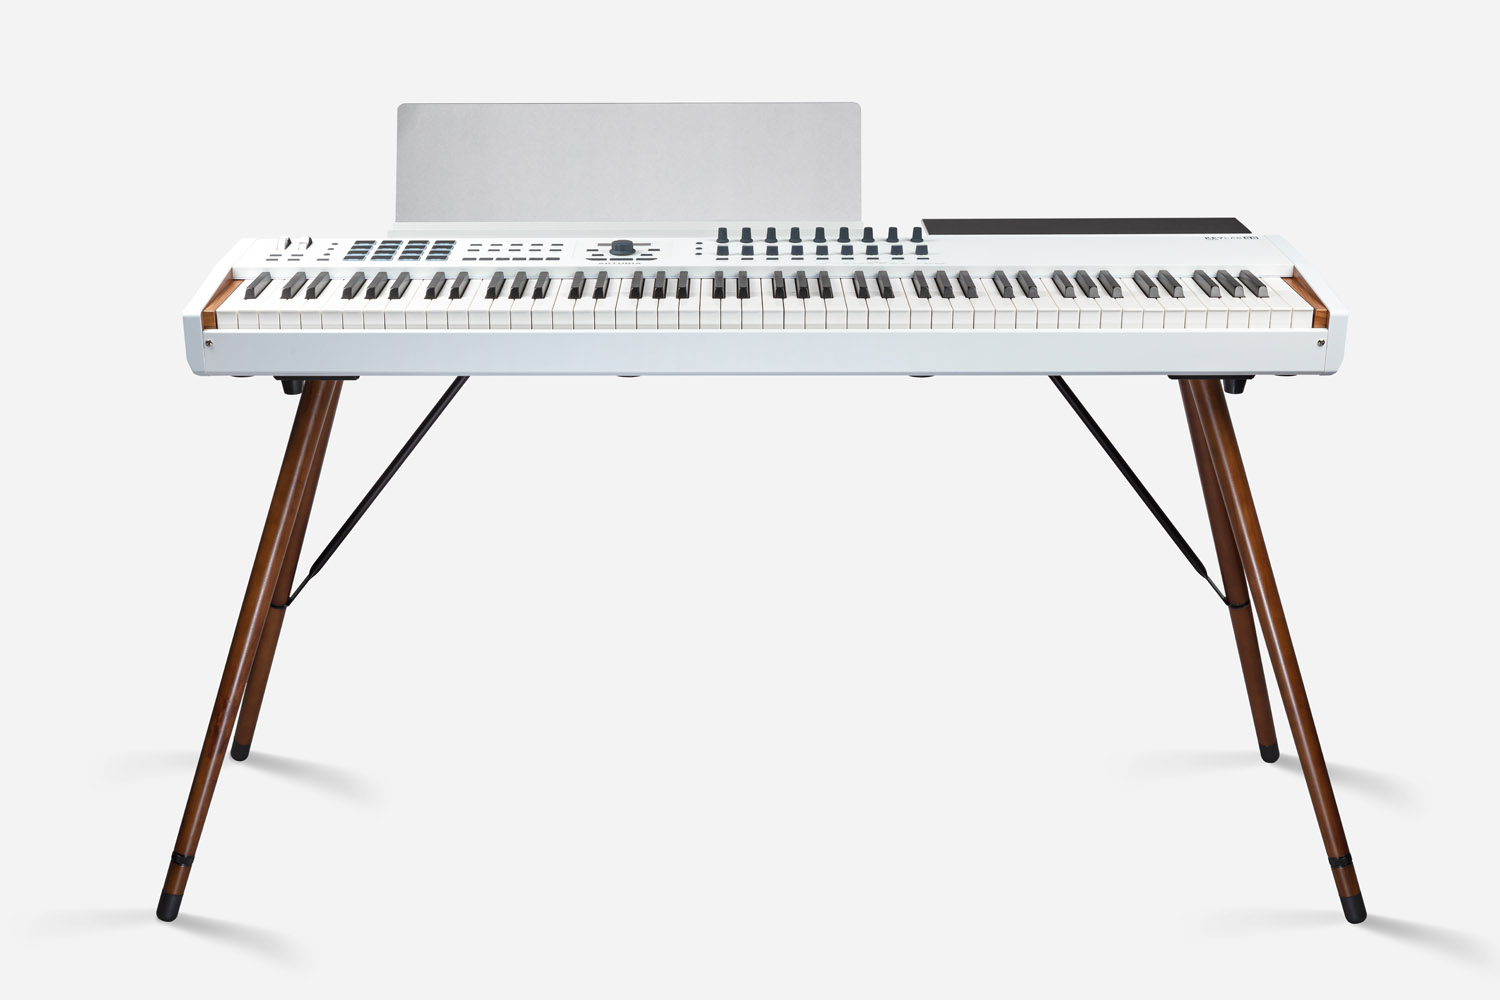 Arturia master keyboard controller midi KeyLab 88 MkII Wooden Legs midiware tasti pesati analog lab strumenti musicali